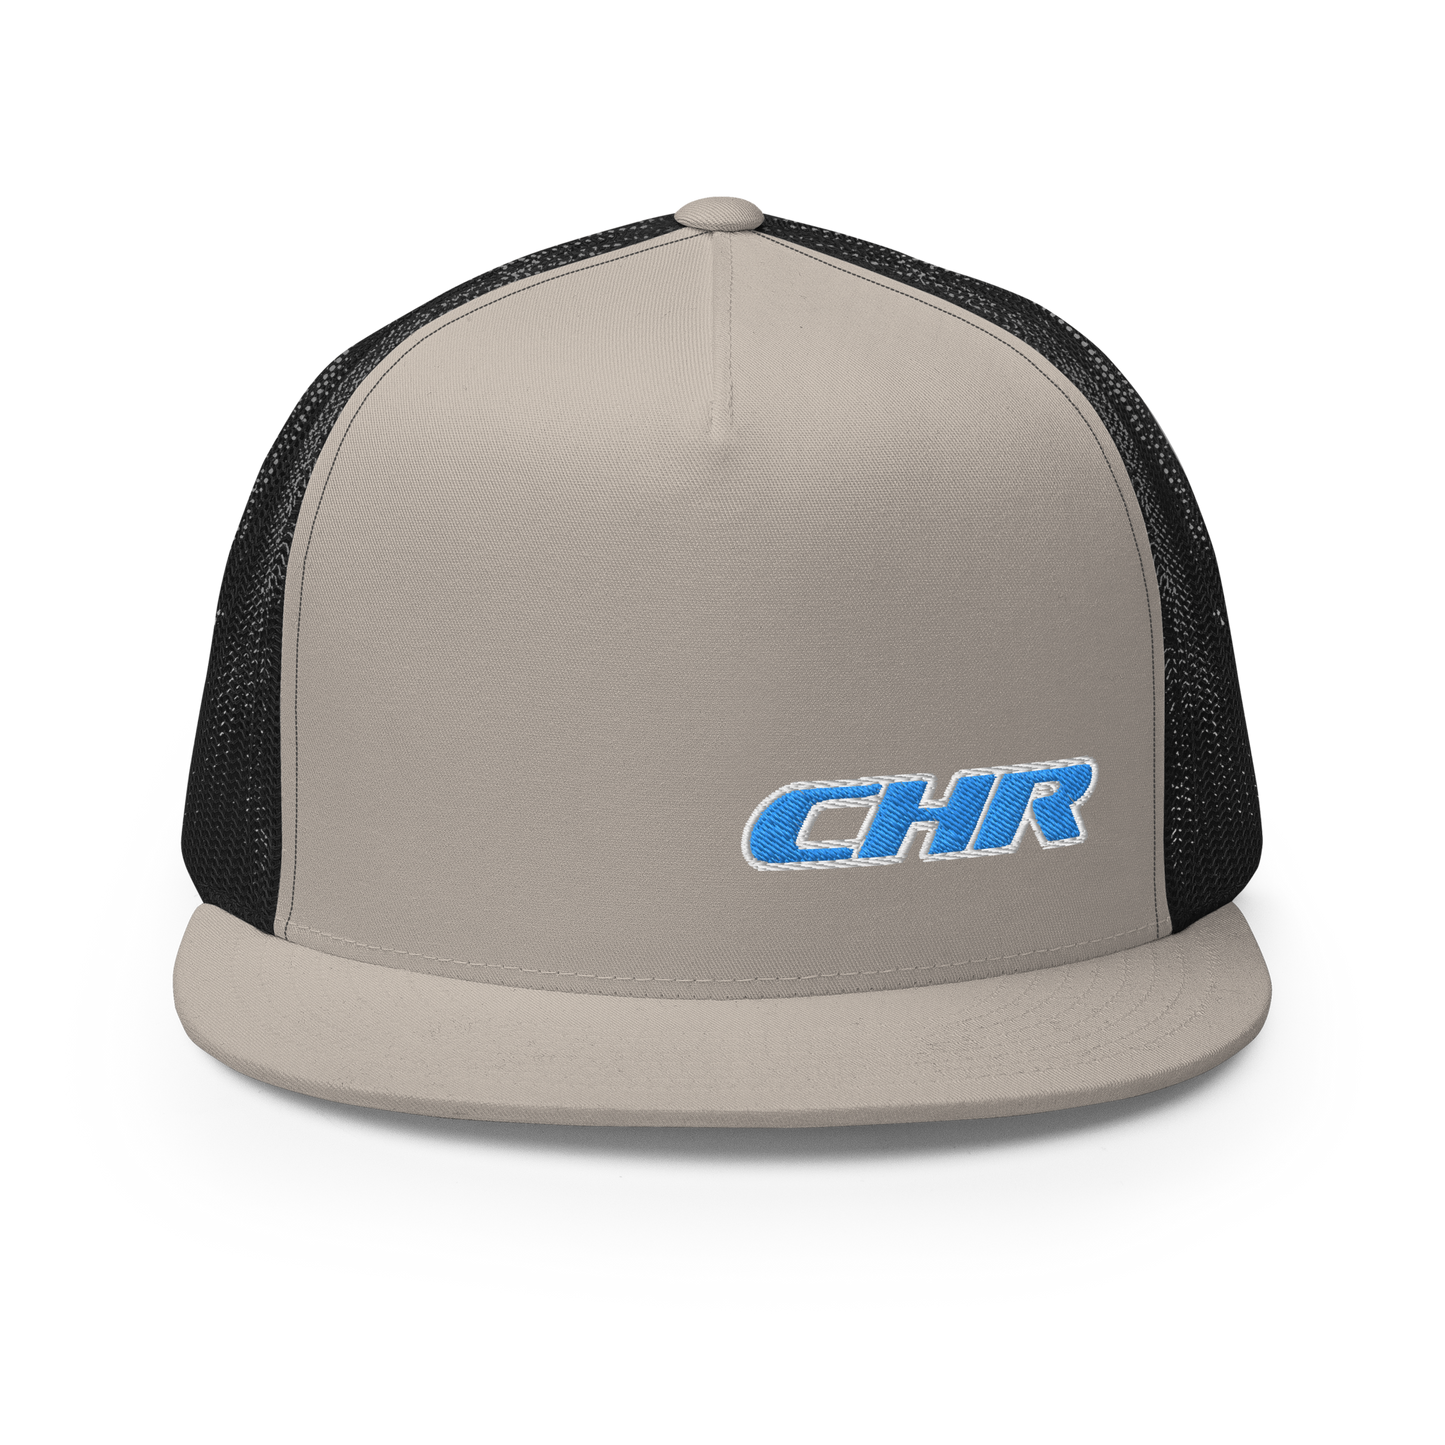 CHR Flat Bill Trucker Cap